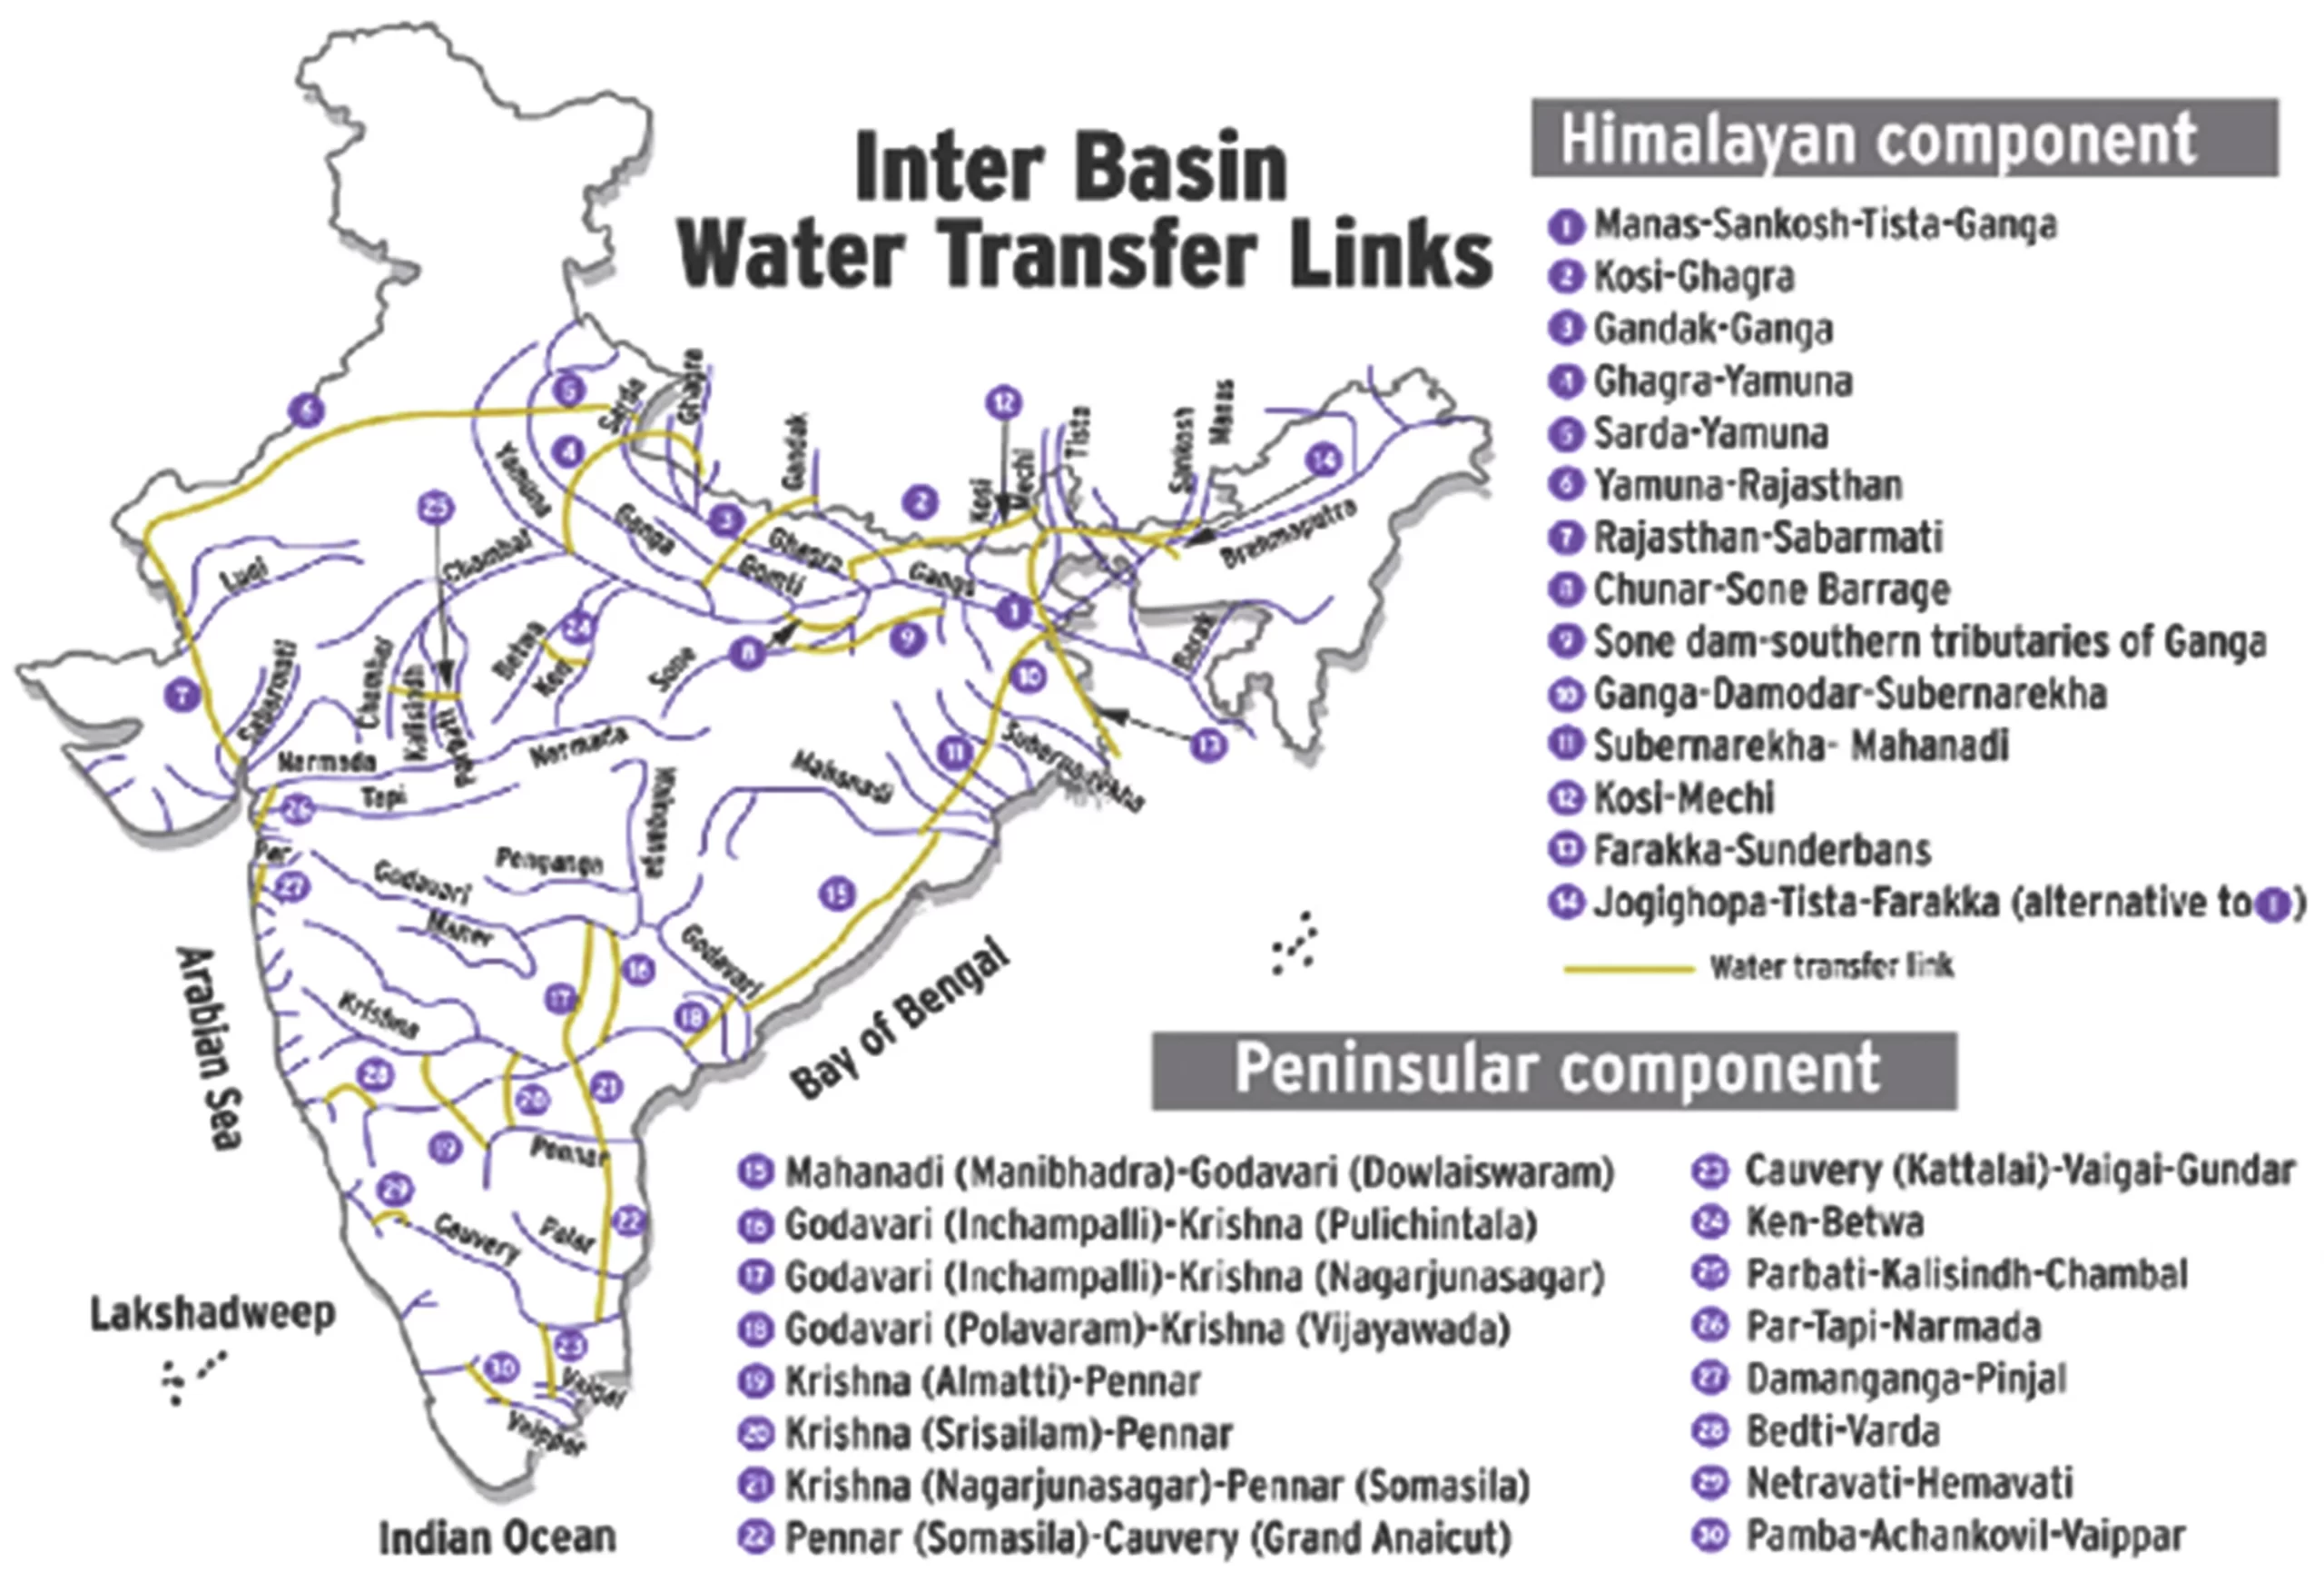 Water transfer links